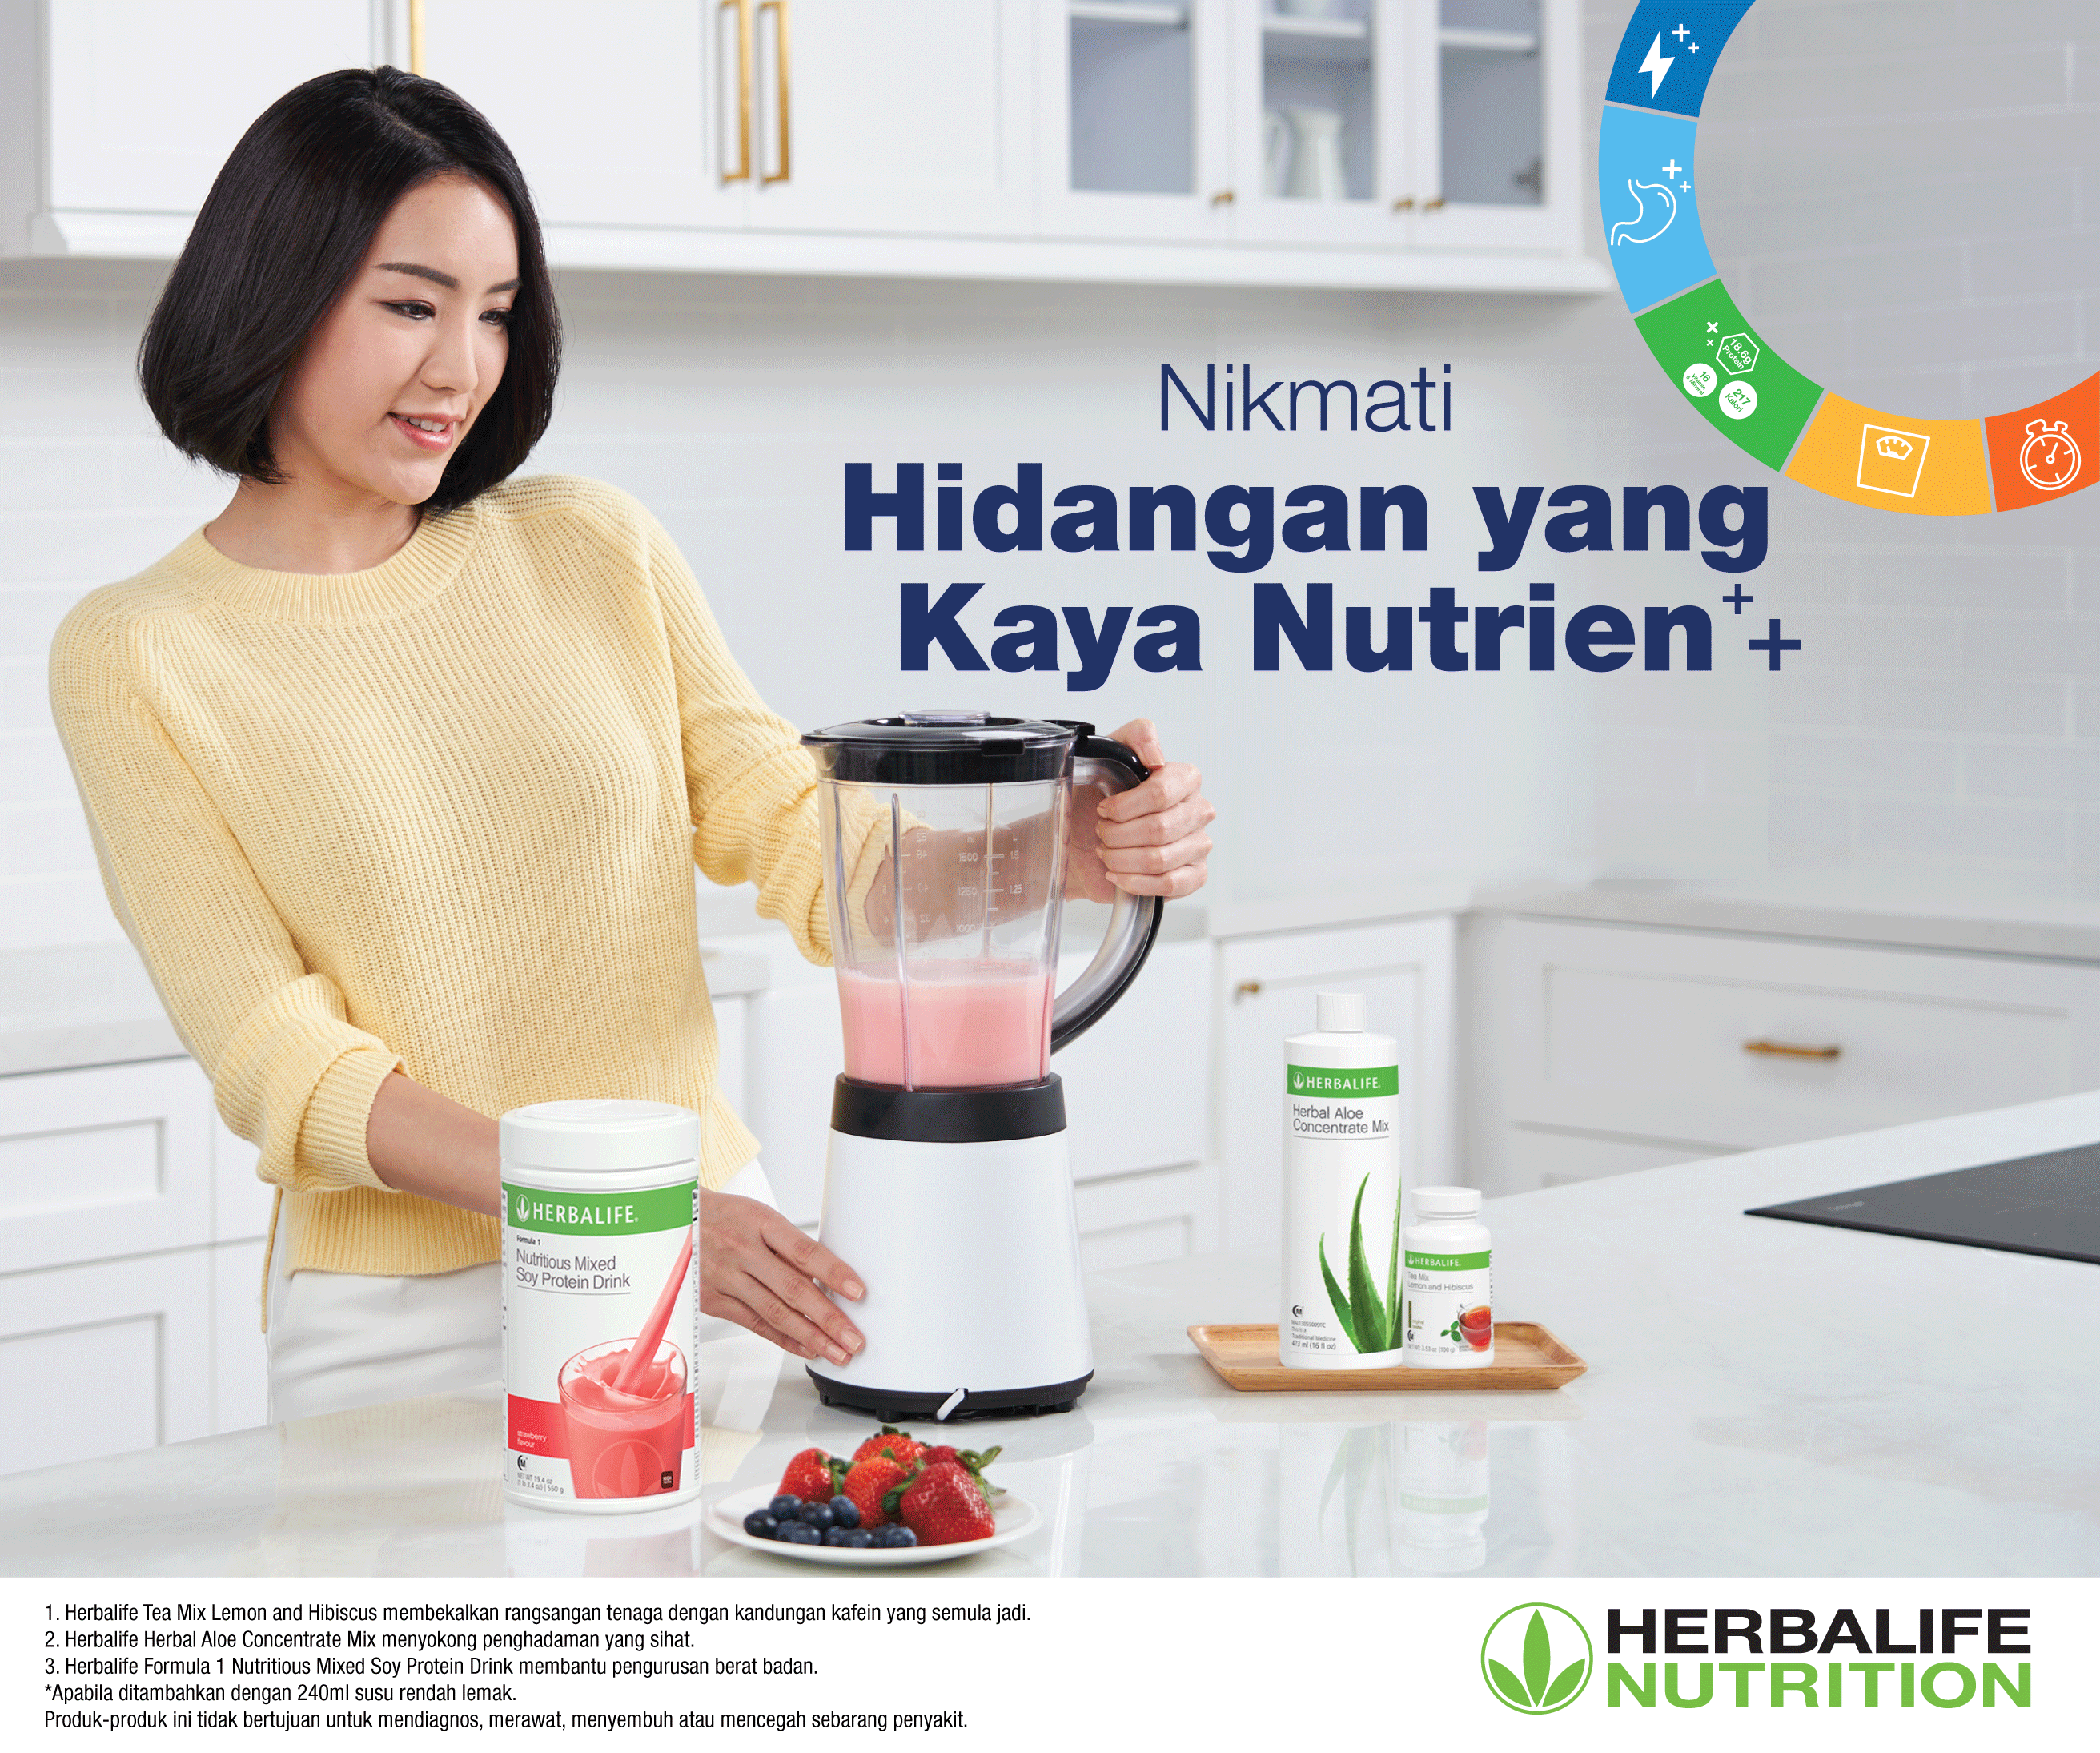 Herbalife Formula 1 Nutritious Mixed Soy Protein Drink kami kaya dengan nutrien, mengandungi 16 vitamin dan mineral, serta 18.6g^ protein. 